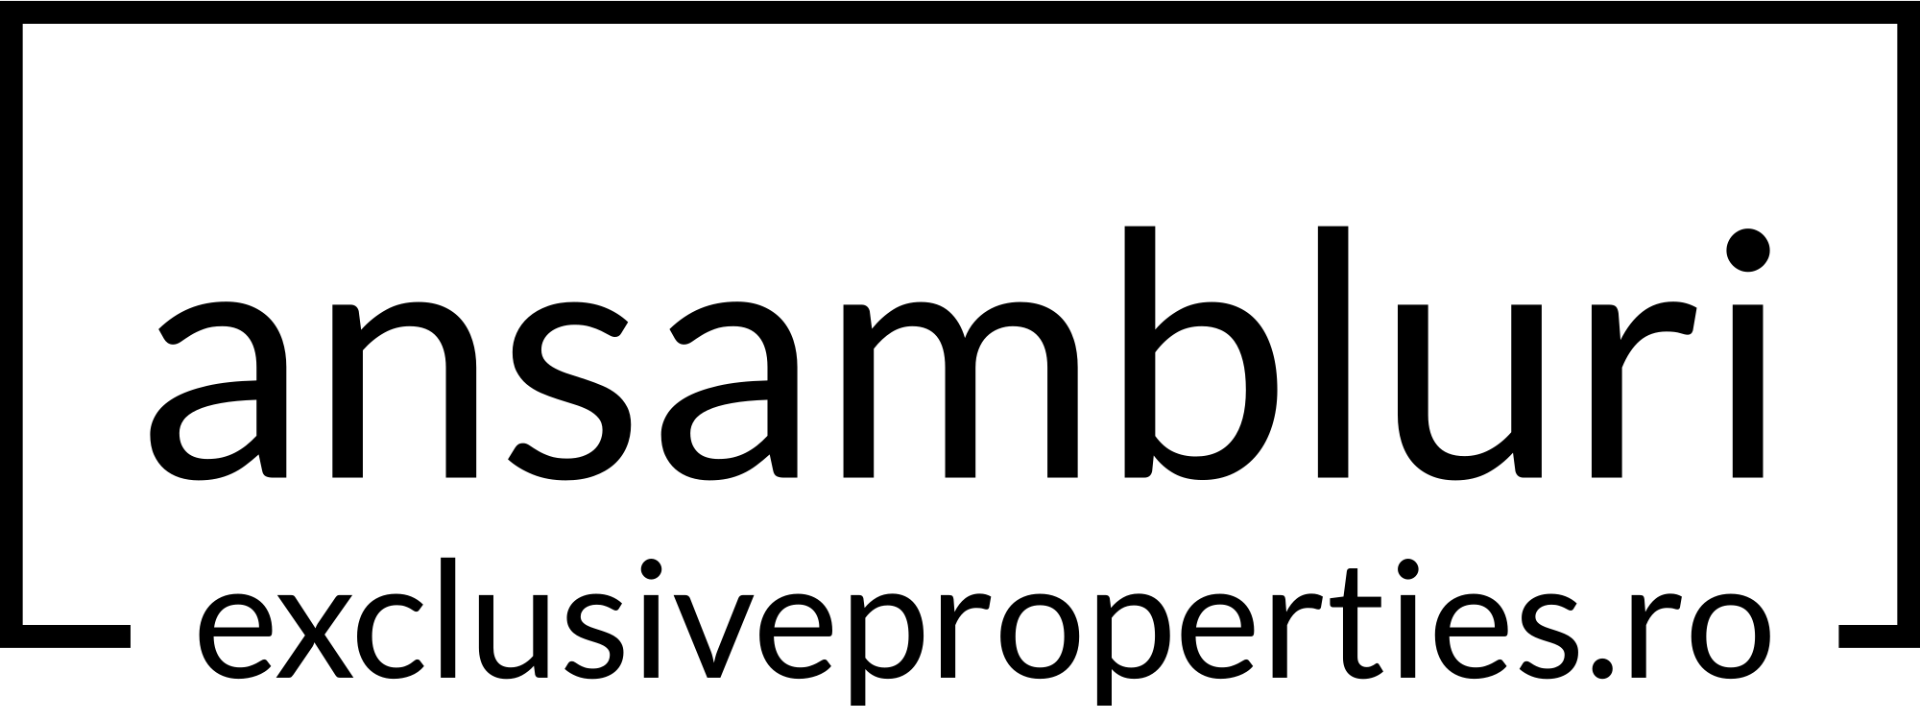 ansambluri-high-resolution-logo-black-transparent